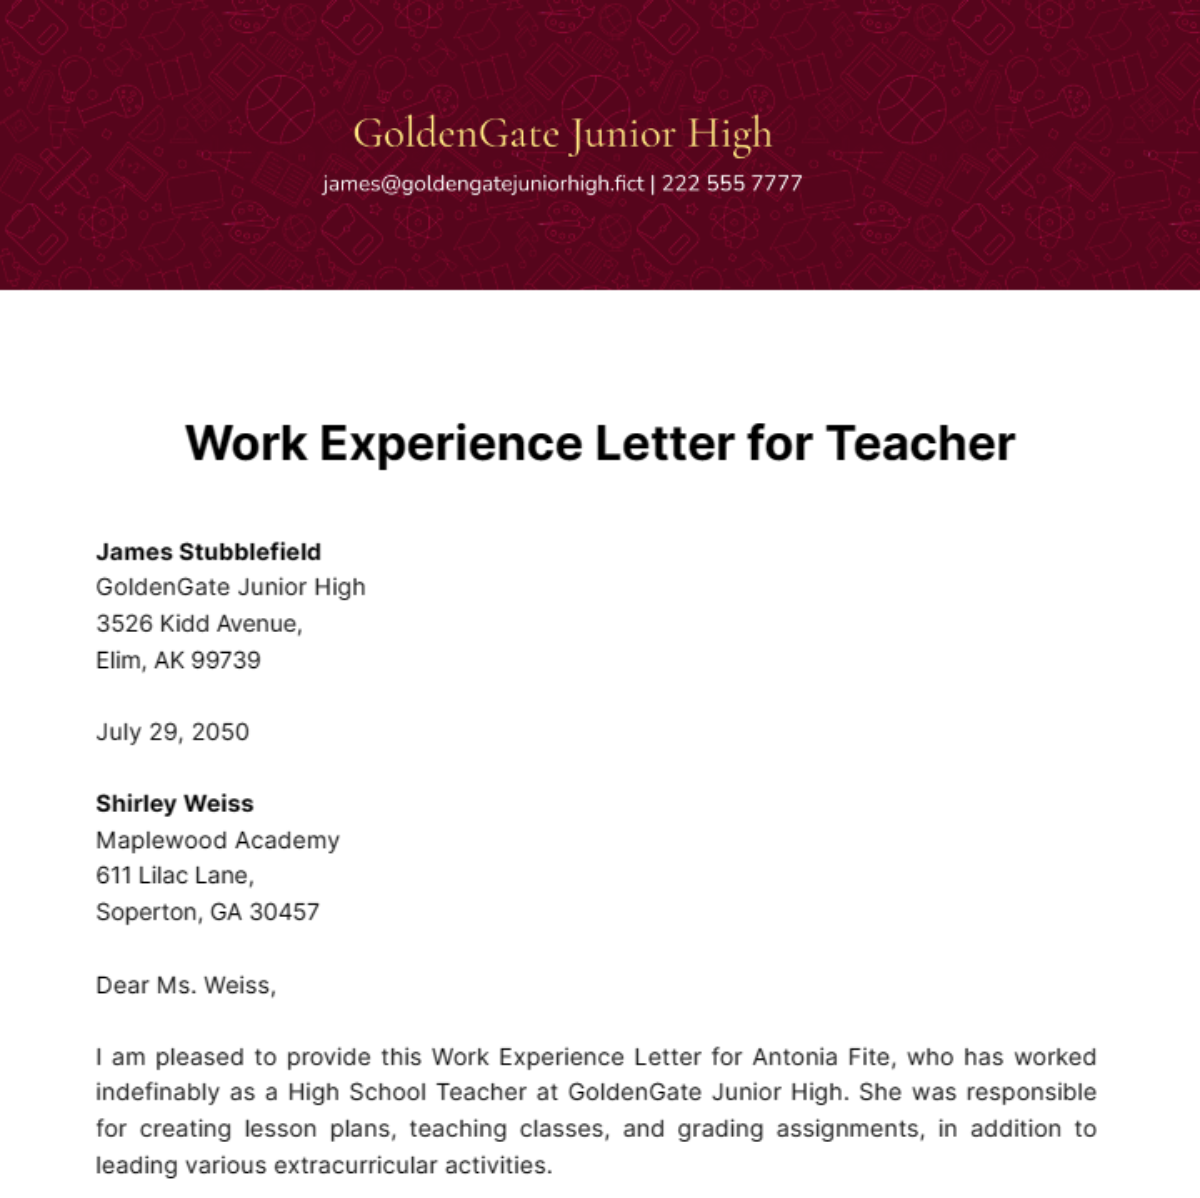 Work Experience Letter for Teacher Template